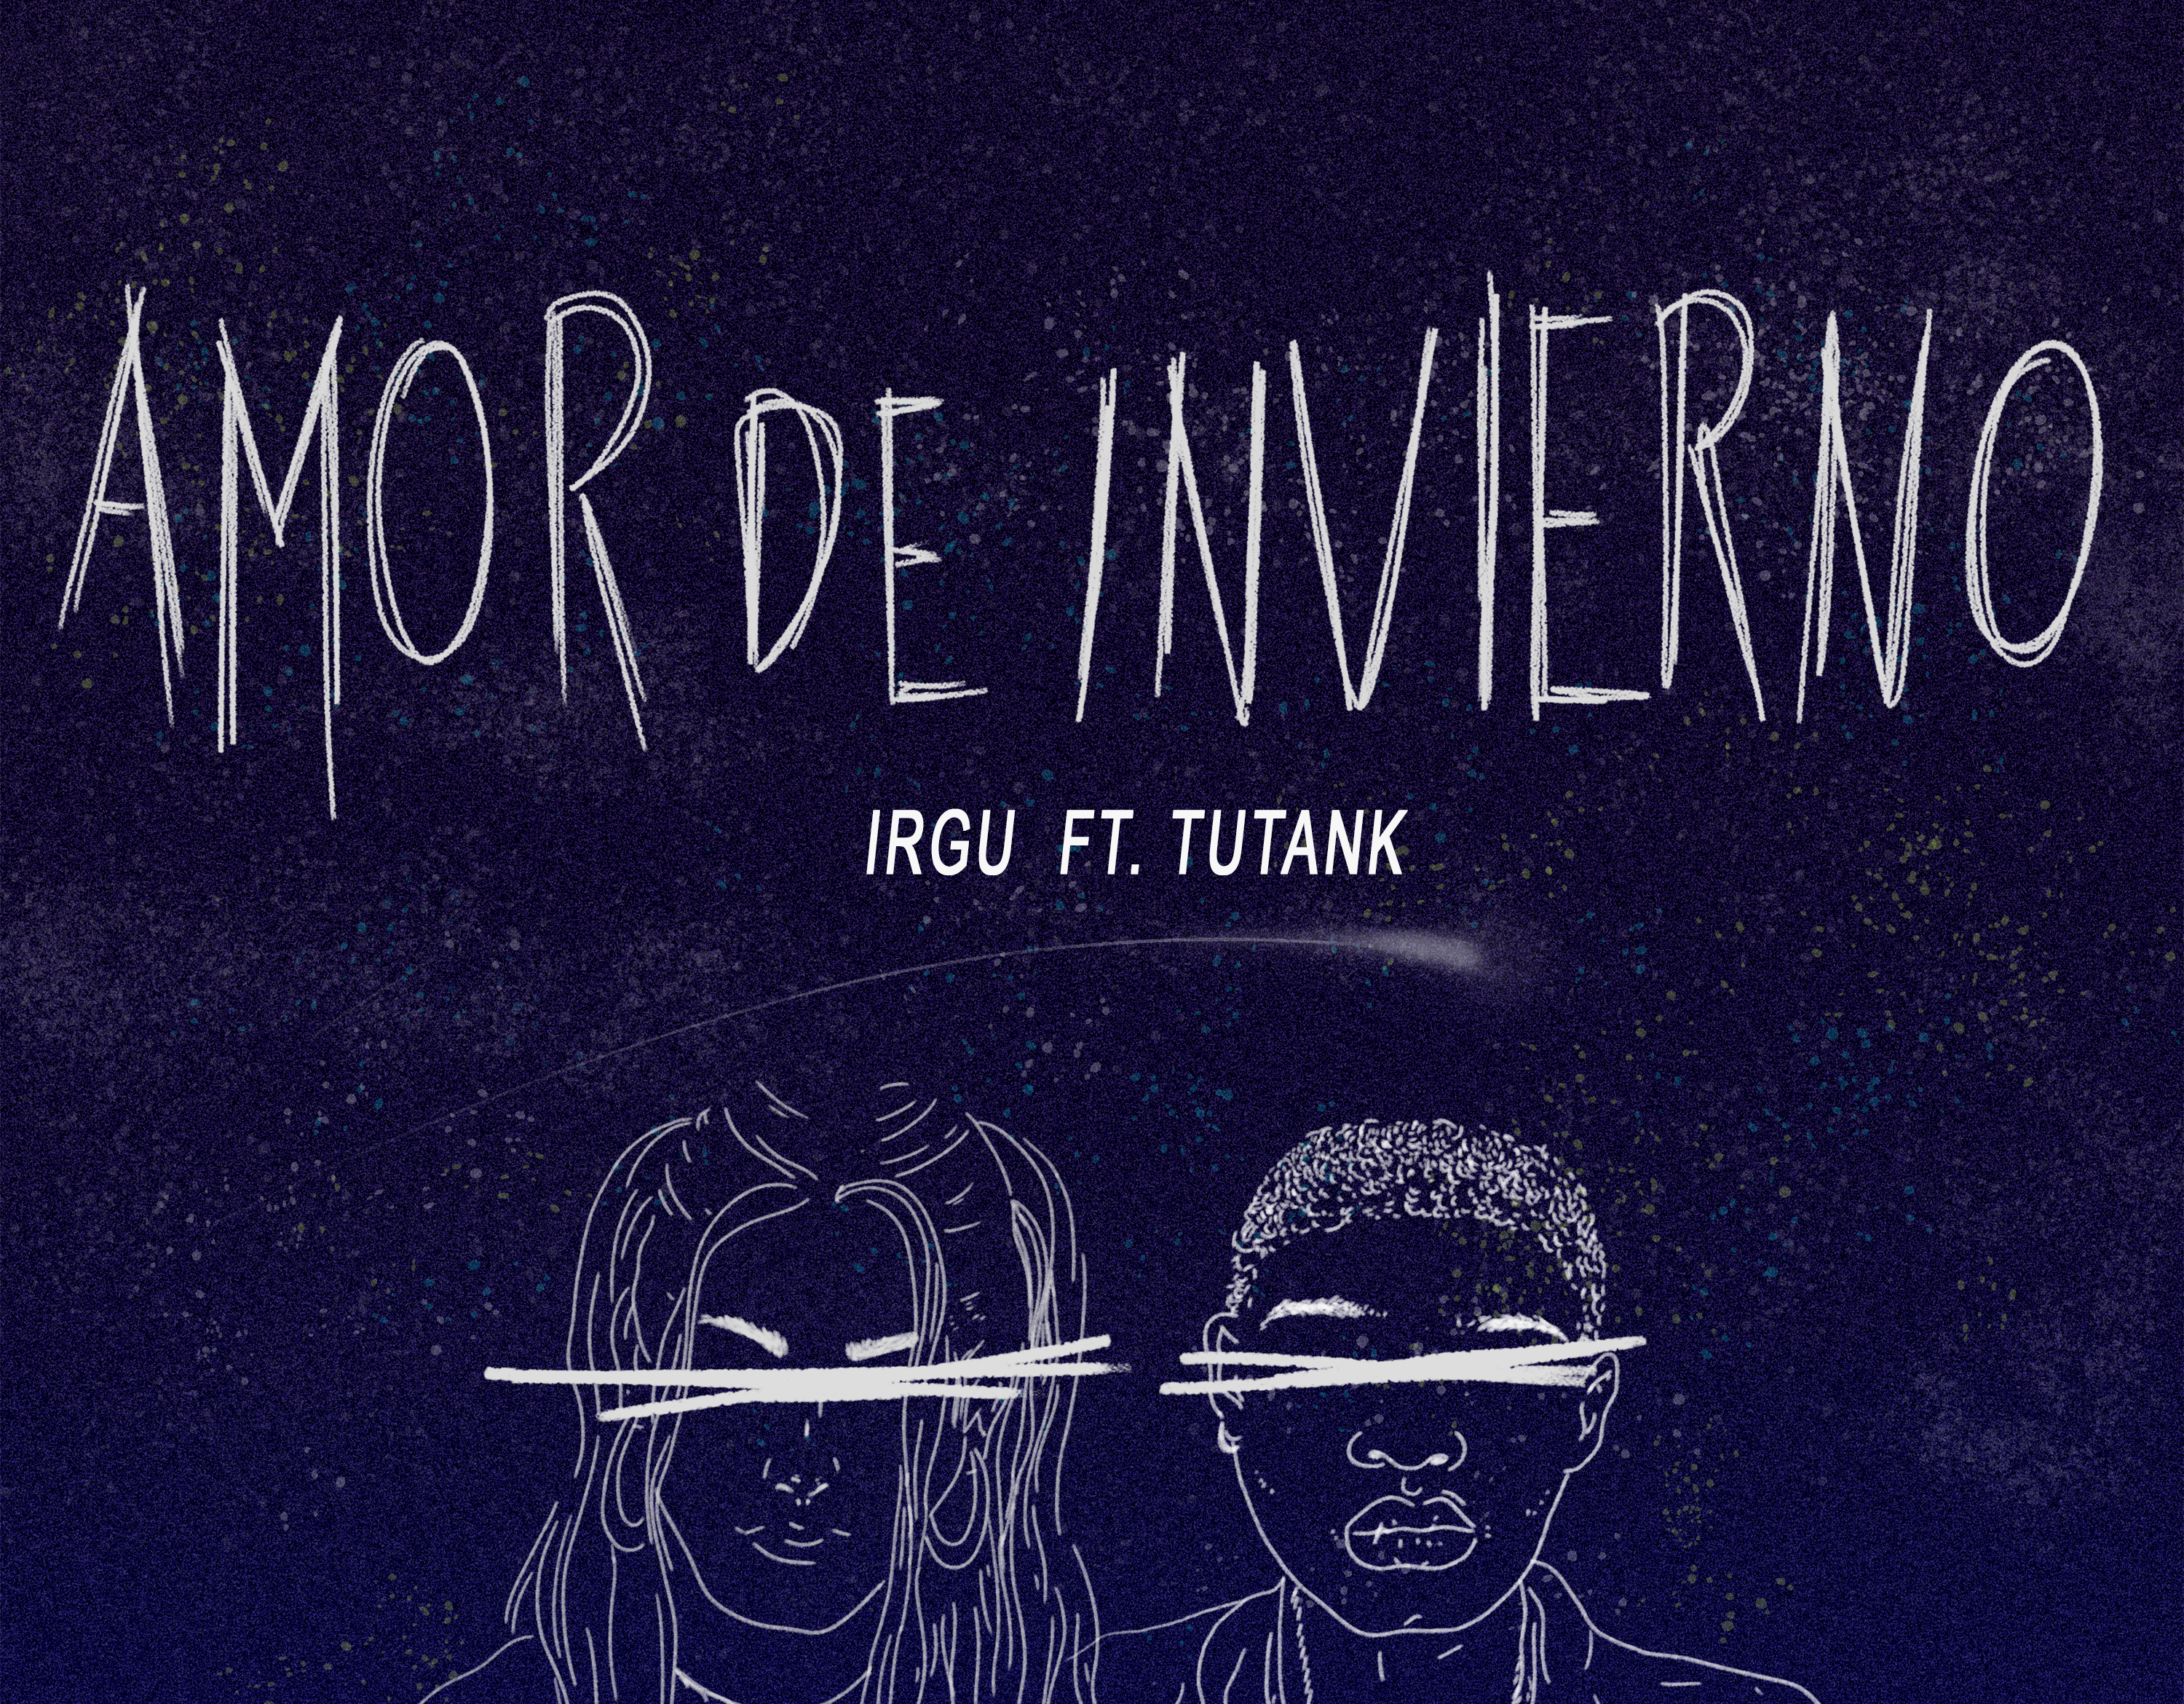 IRGU ft. TUTANK - Nuevo single - Amor de invierno